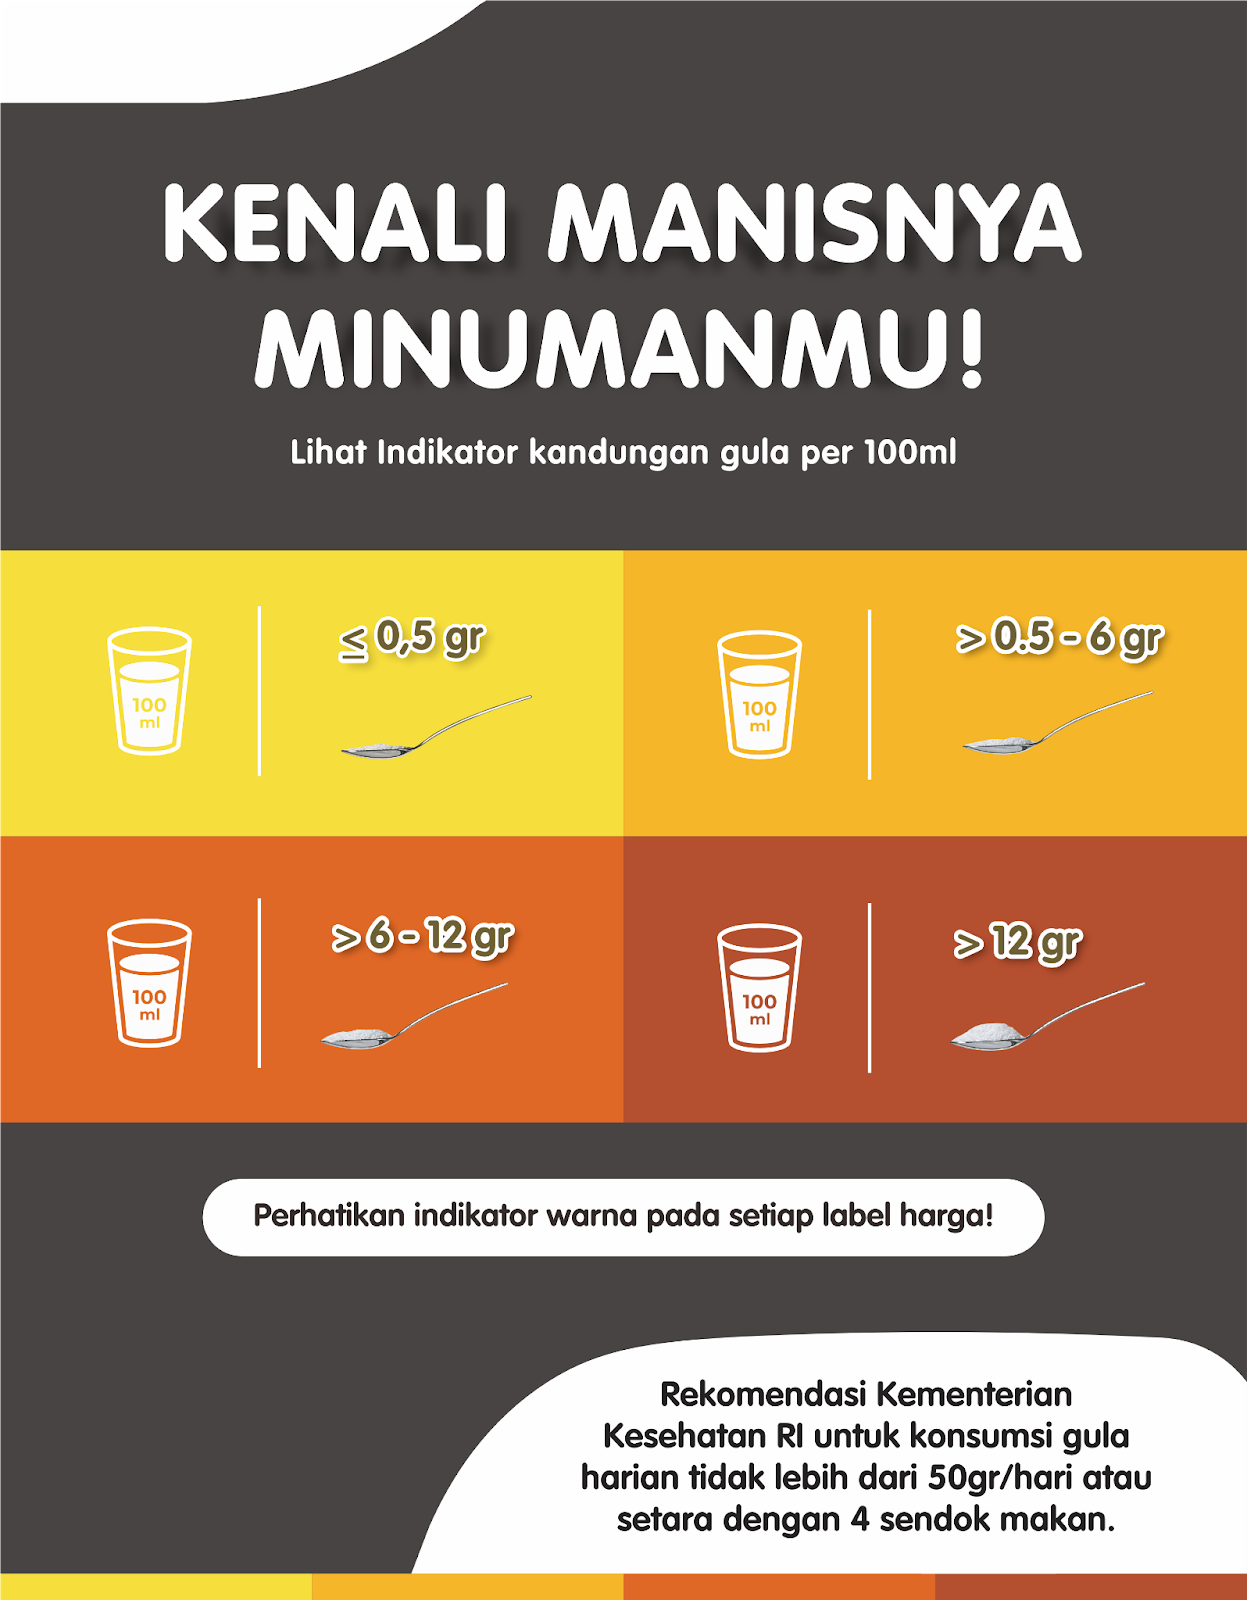 Marketing Funnel : Kenali Manisnya Minumanmu! Indikator kandungan gula per 100ml, <0,5gr warna kuning, >0,5gr - 6gr jingga terang, >6gr - 12gr jingga gelap, >12gr merah